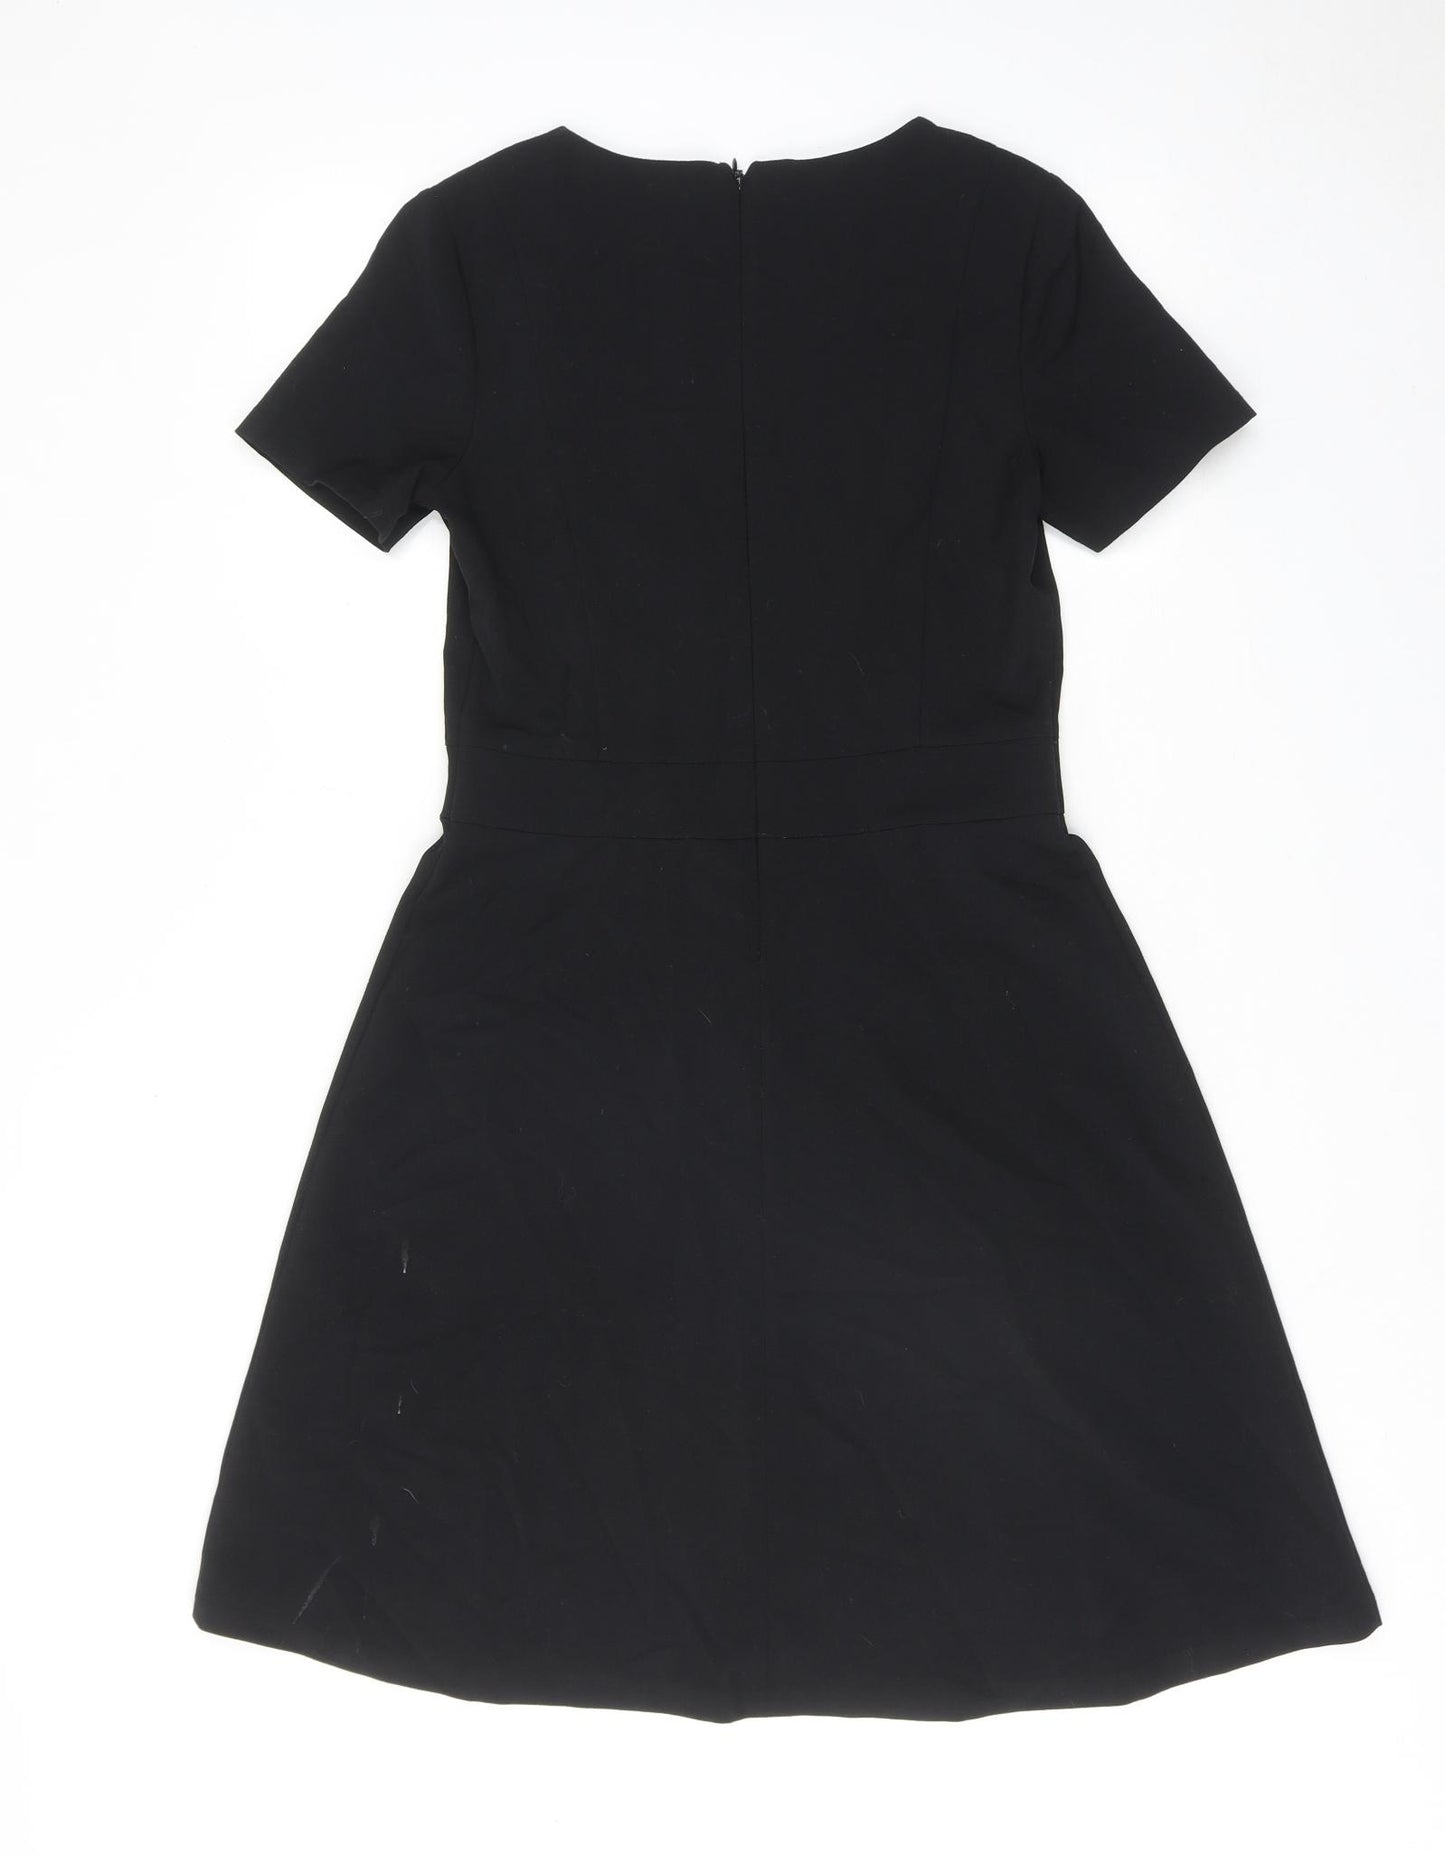 NEXT Womens Black Polyester Skater Dress Size 10 V-Neck Zip